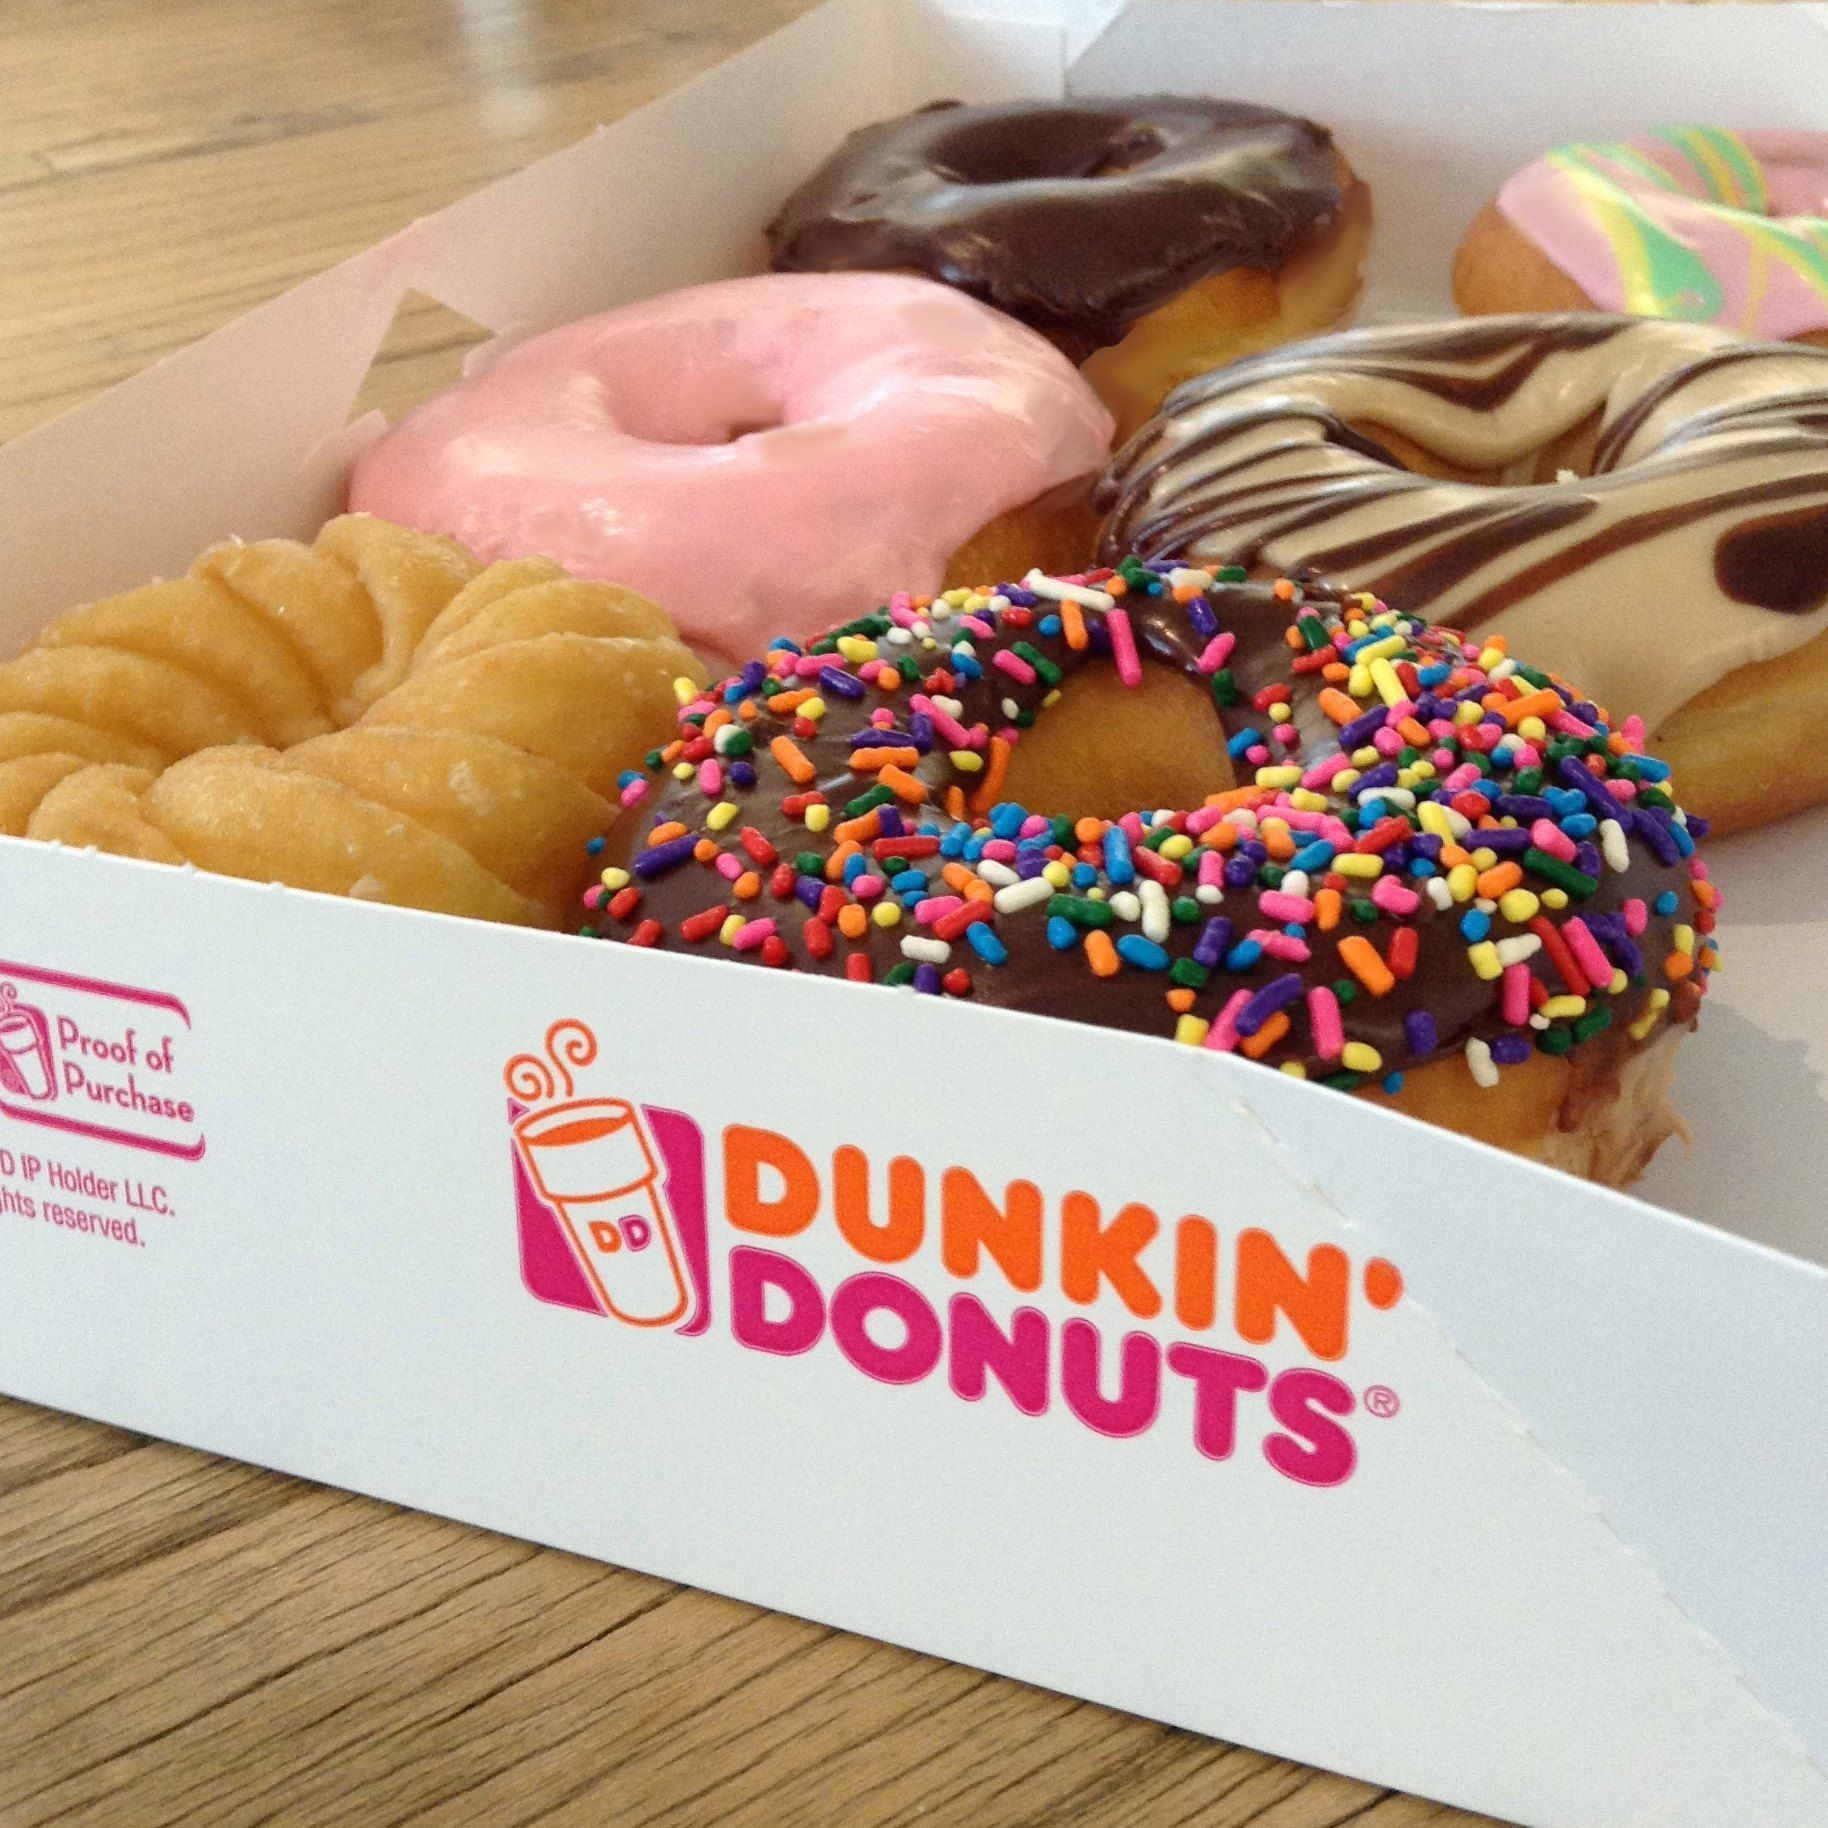 Glazed Donuts Tumblr. Dunkin donuts, Dunkin, Donuts